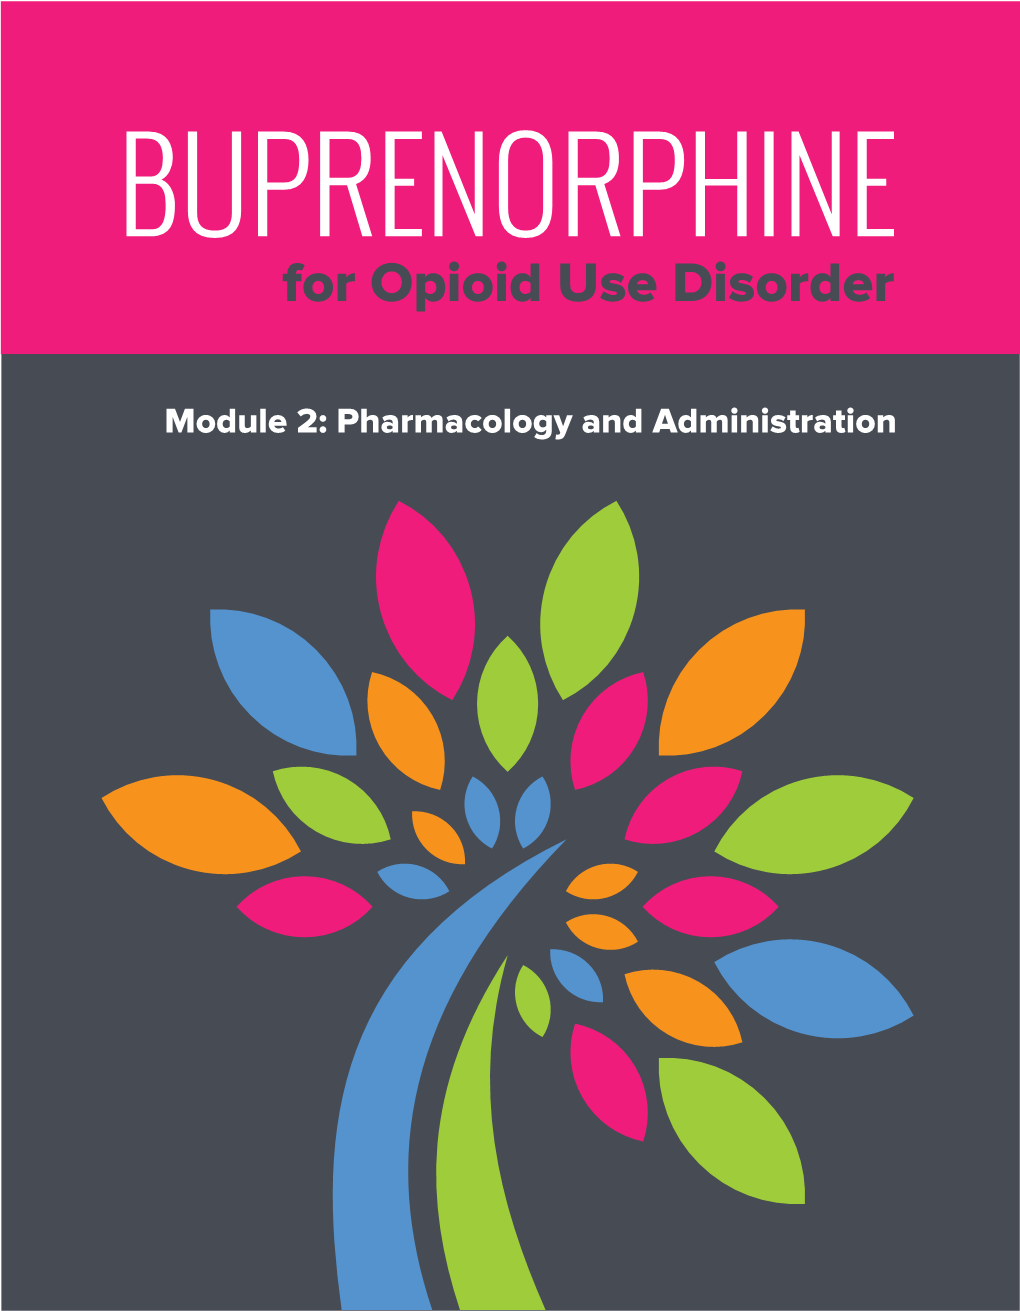 BUPRENORPHINE for Opioid Use Disorder